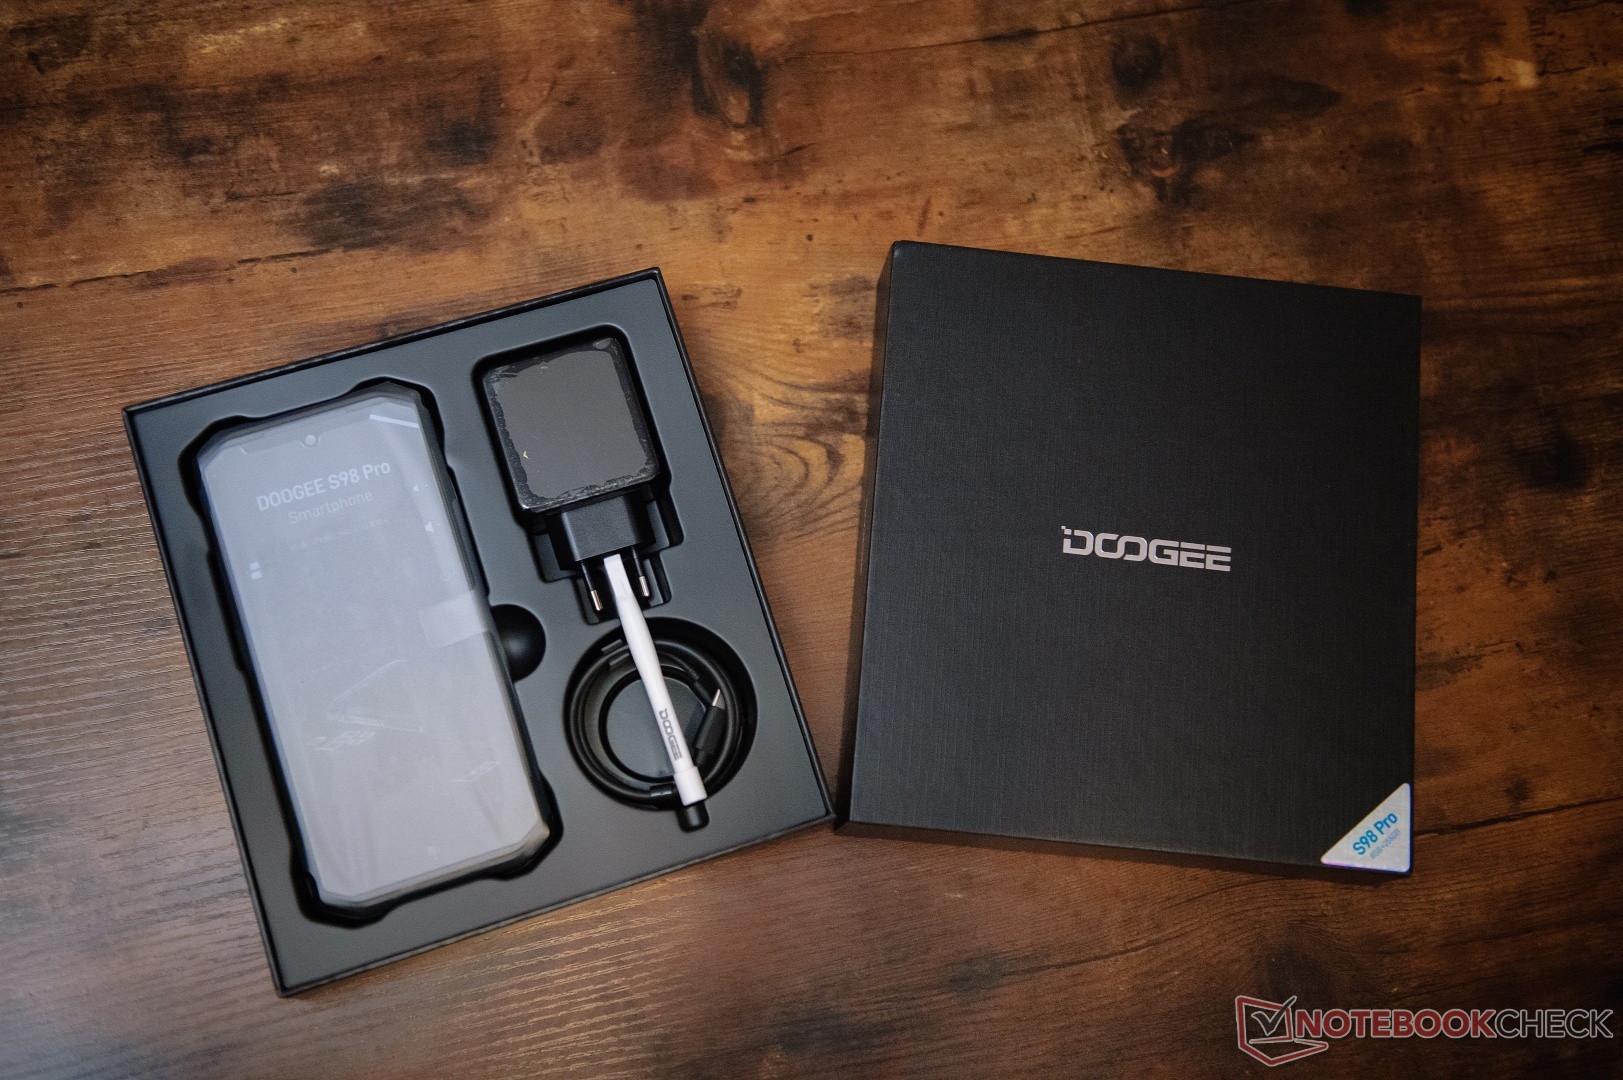 Doogee S98 Pro Rugged Phone